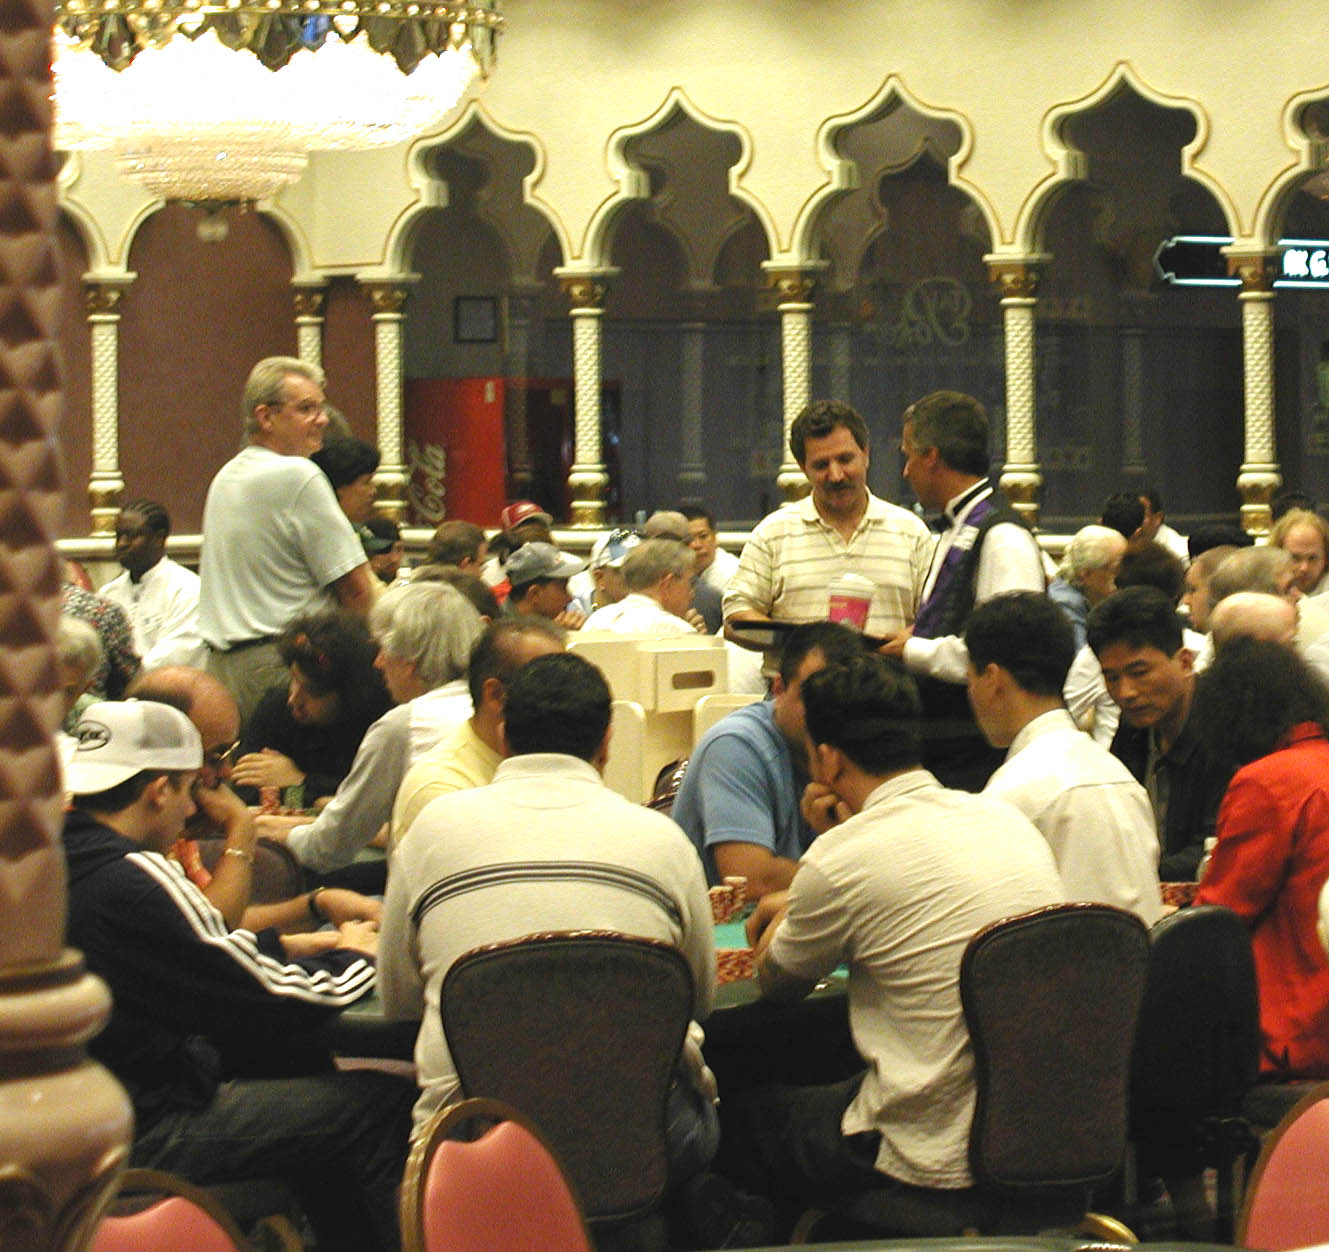 Atlantic City poker rooms